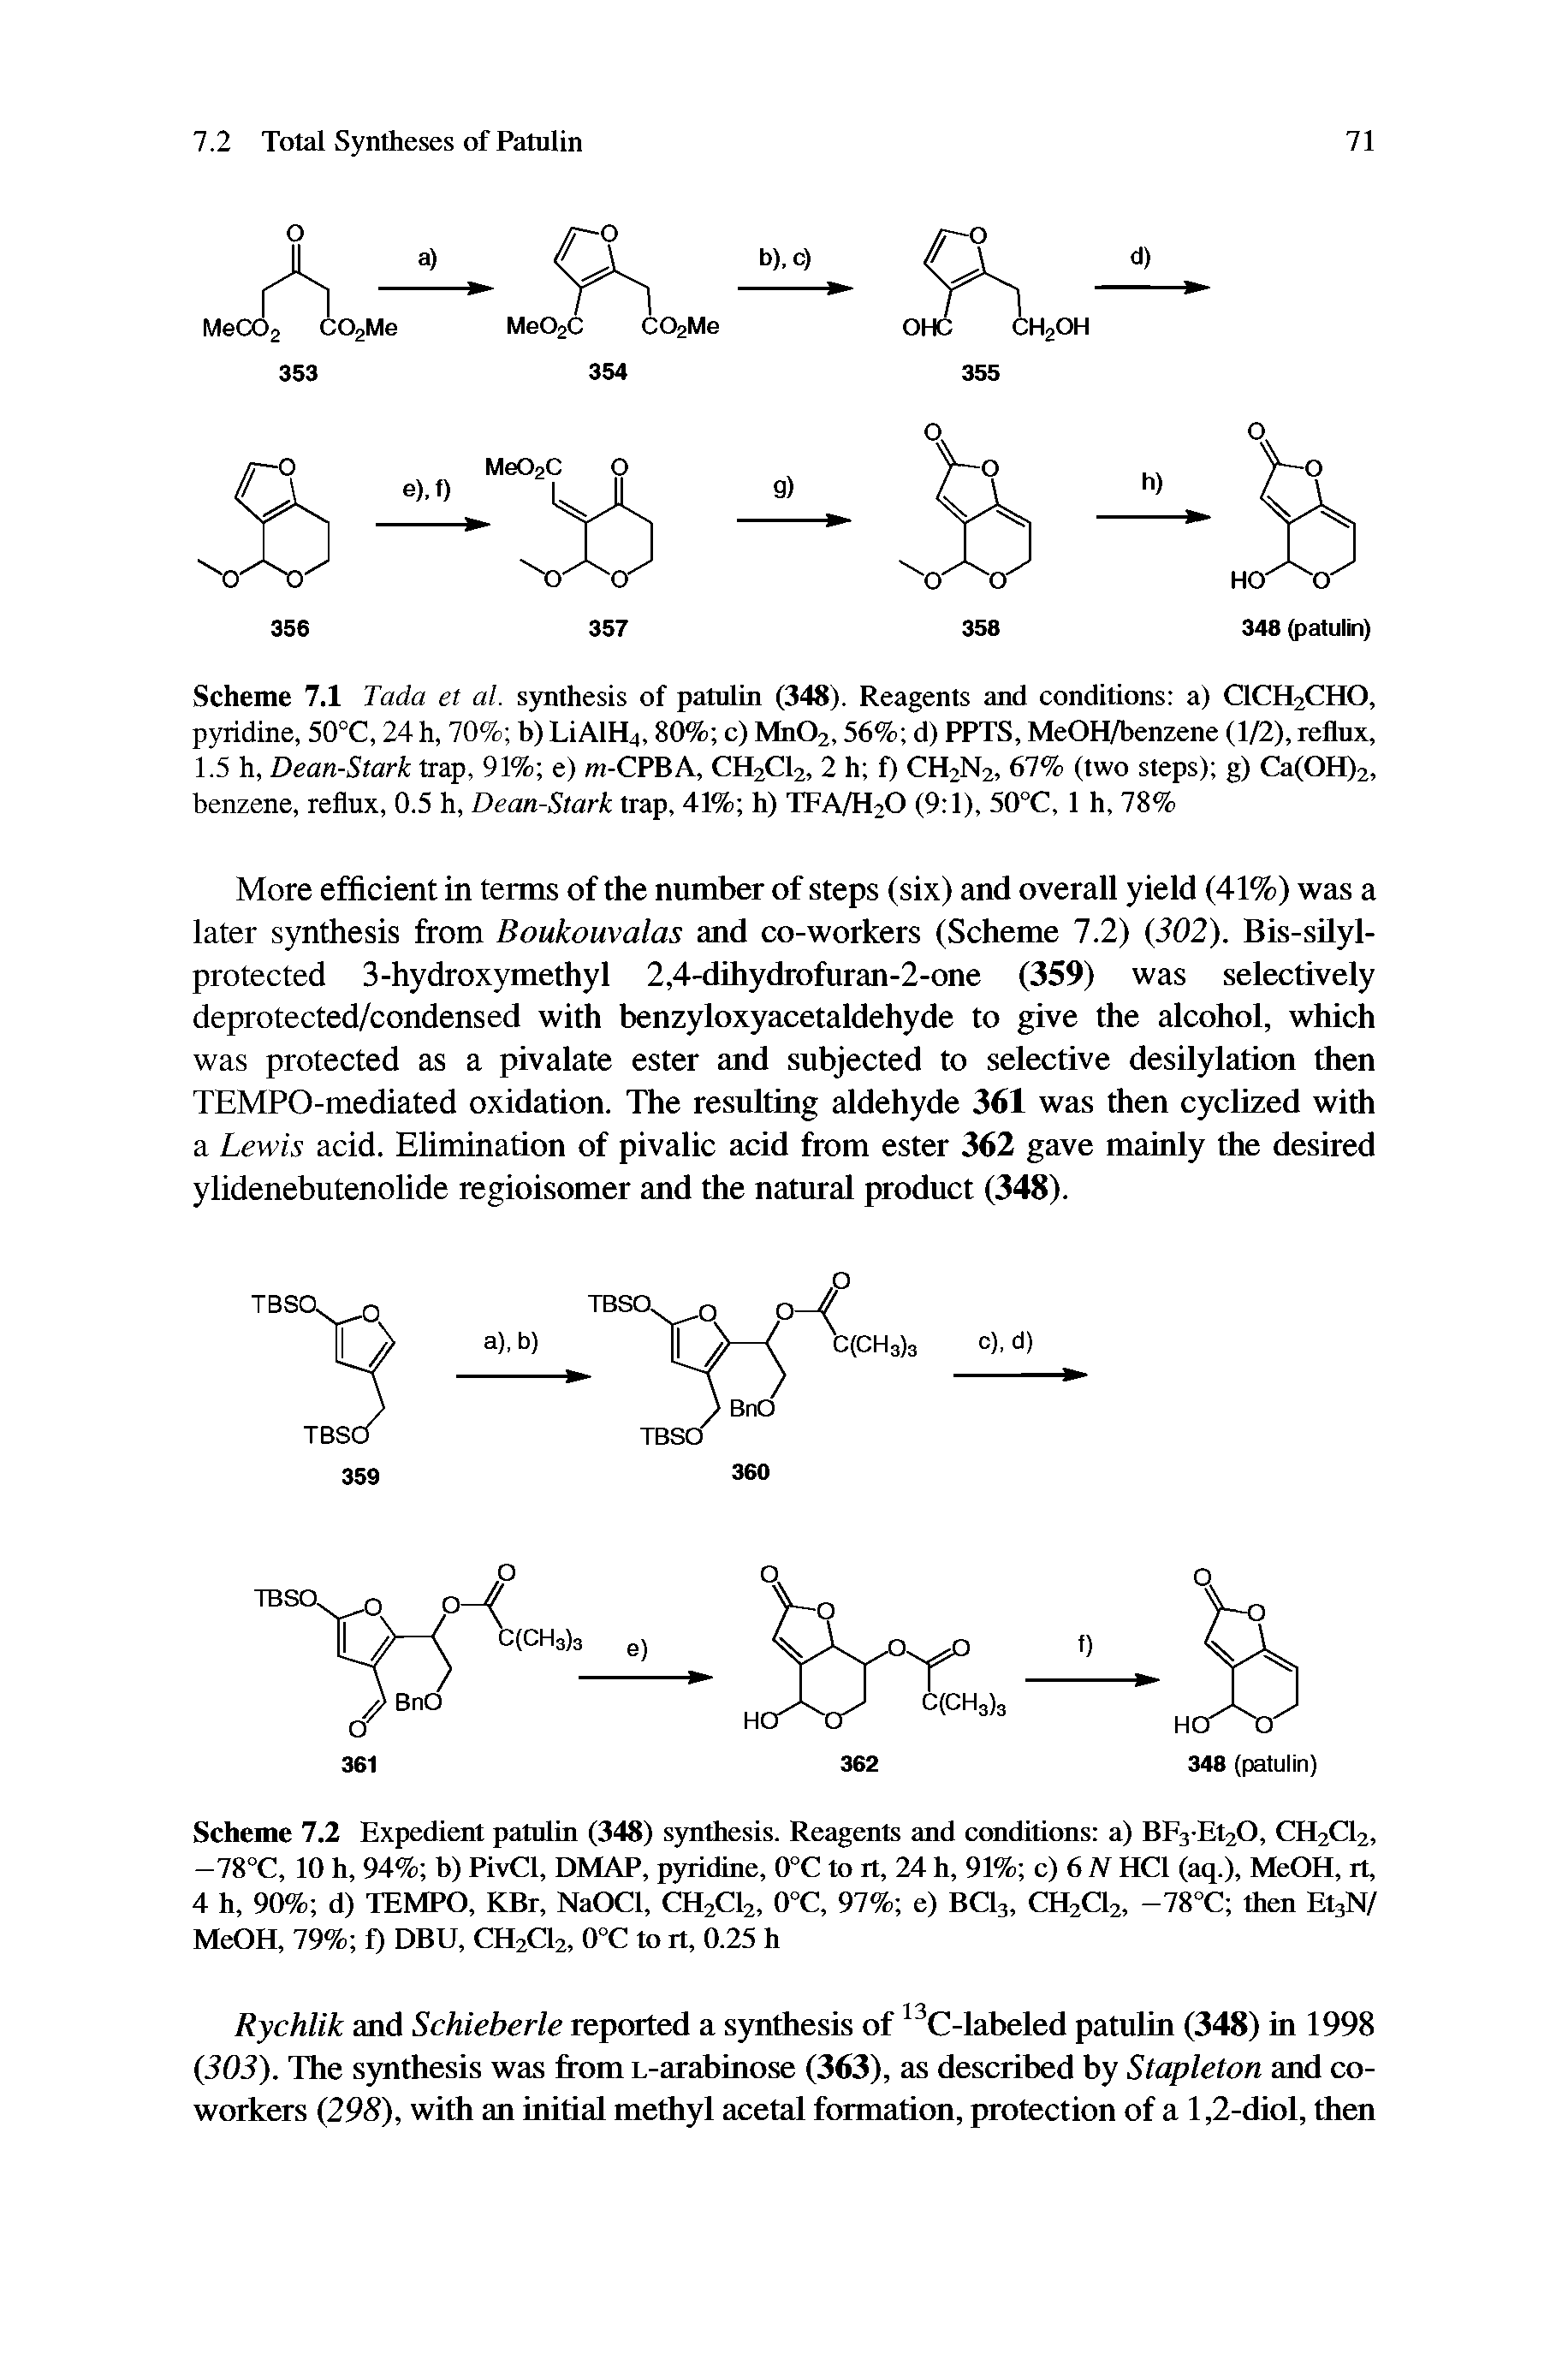 Scheme 7.1 Tada et al. synthesis of patulin (348). Reagents and conditions a) CICH2CHO, pyridine, 50°C, 24 h, 70% b) LiAlH4,80% c) MnOz, 56% d) PPTS, MeOH/benzene (1/2), reflux, 1.5 h, Dean-Stark trap, 91% e) m-CPBA, CH2CI2, 2 h f) CH2N2, 67% (two steps) g) Ca(OH)2, benzene, reflux, 0.5 h, Dean-Stark trap, 41% h) TFA/H2O (9 1), 50°C, 1 h, 78%...